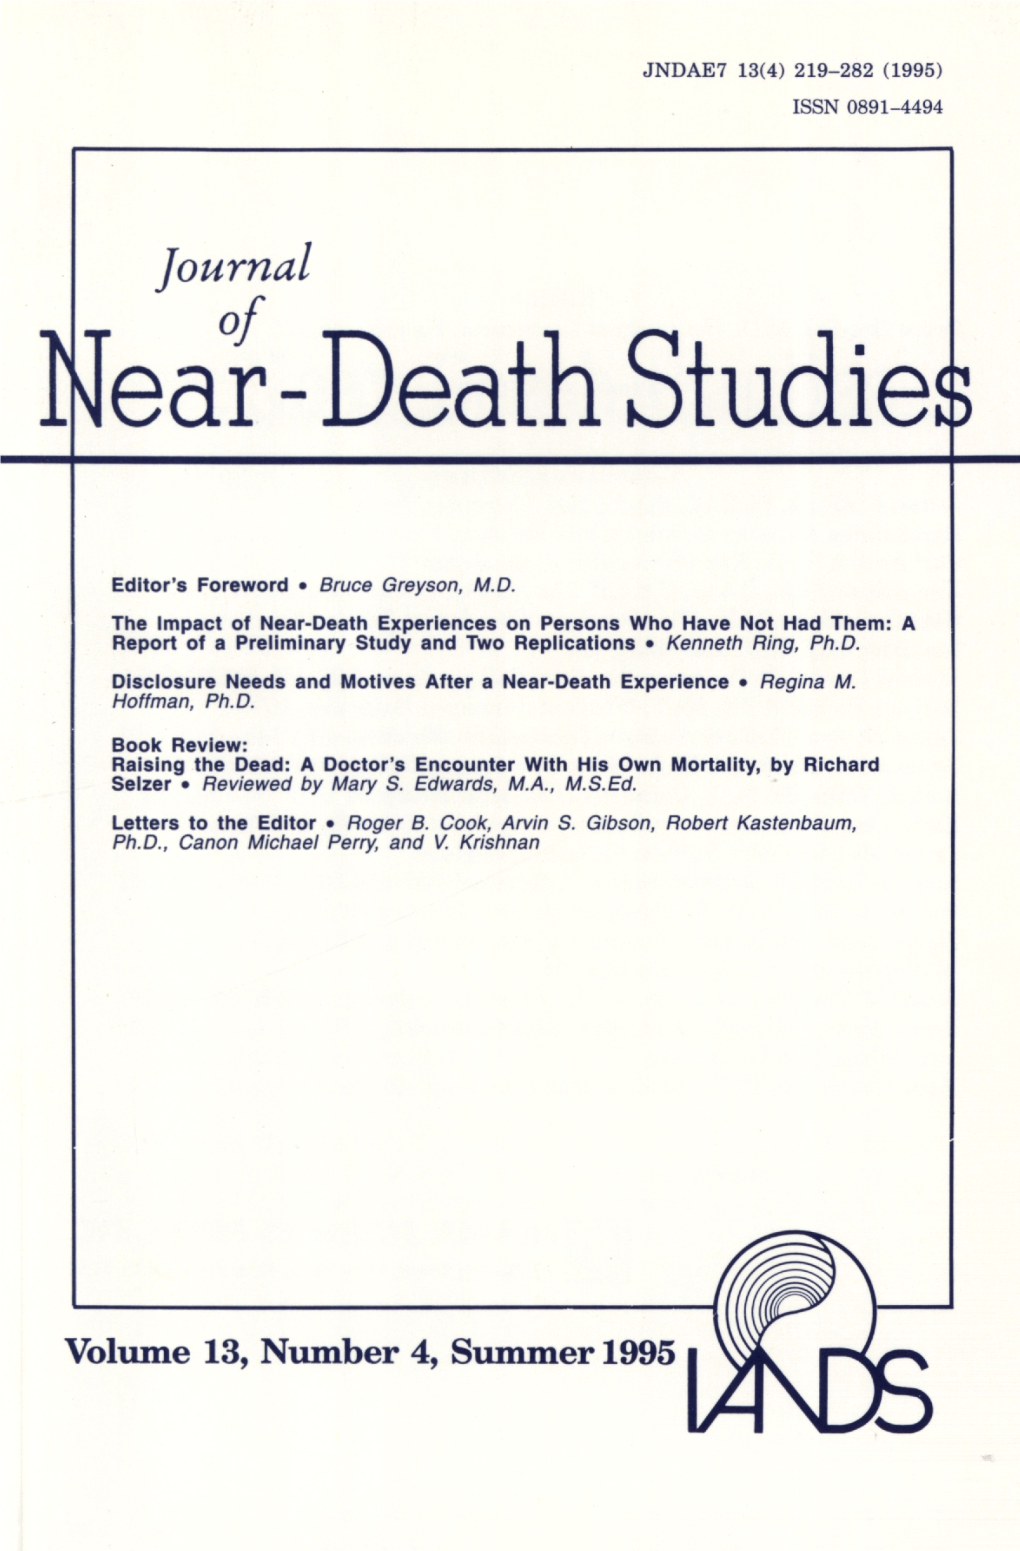 Death Studies 11